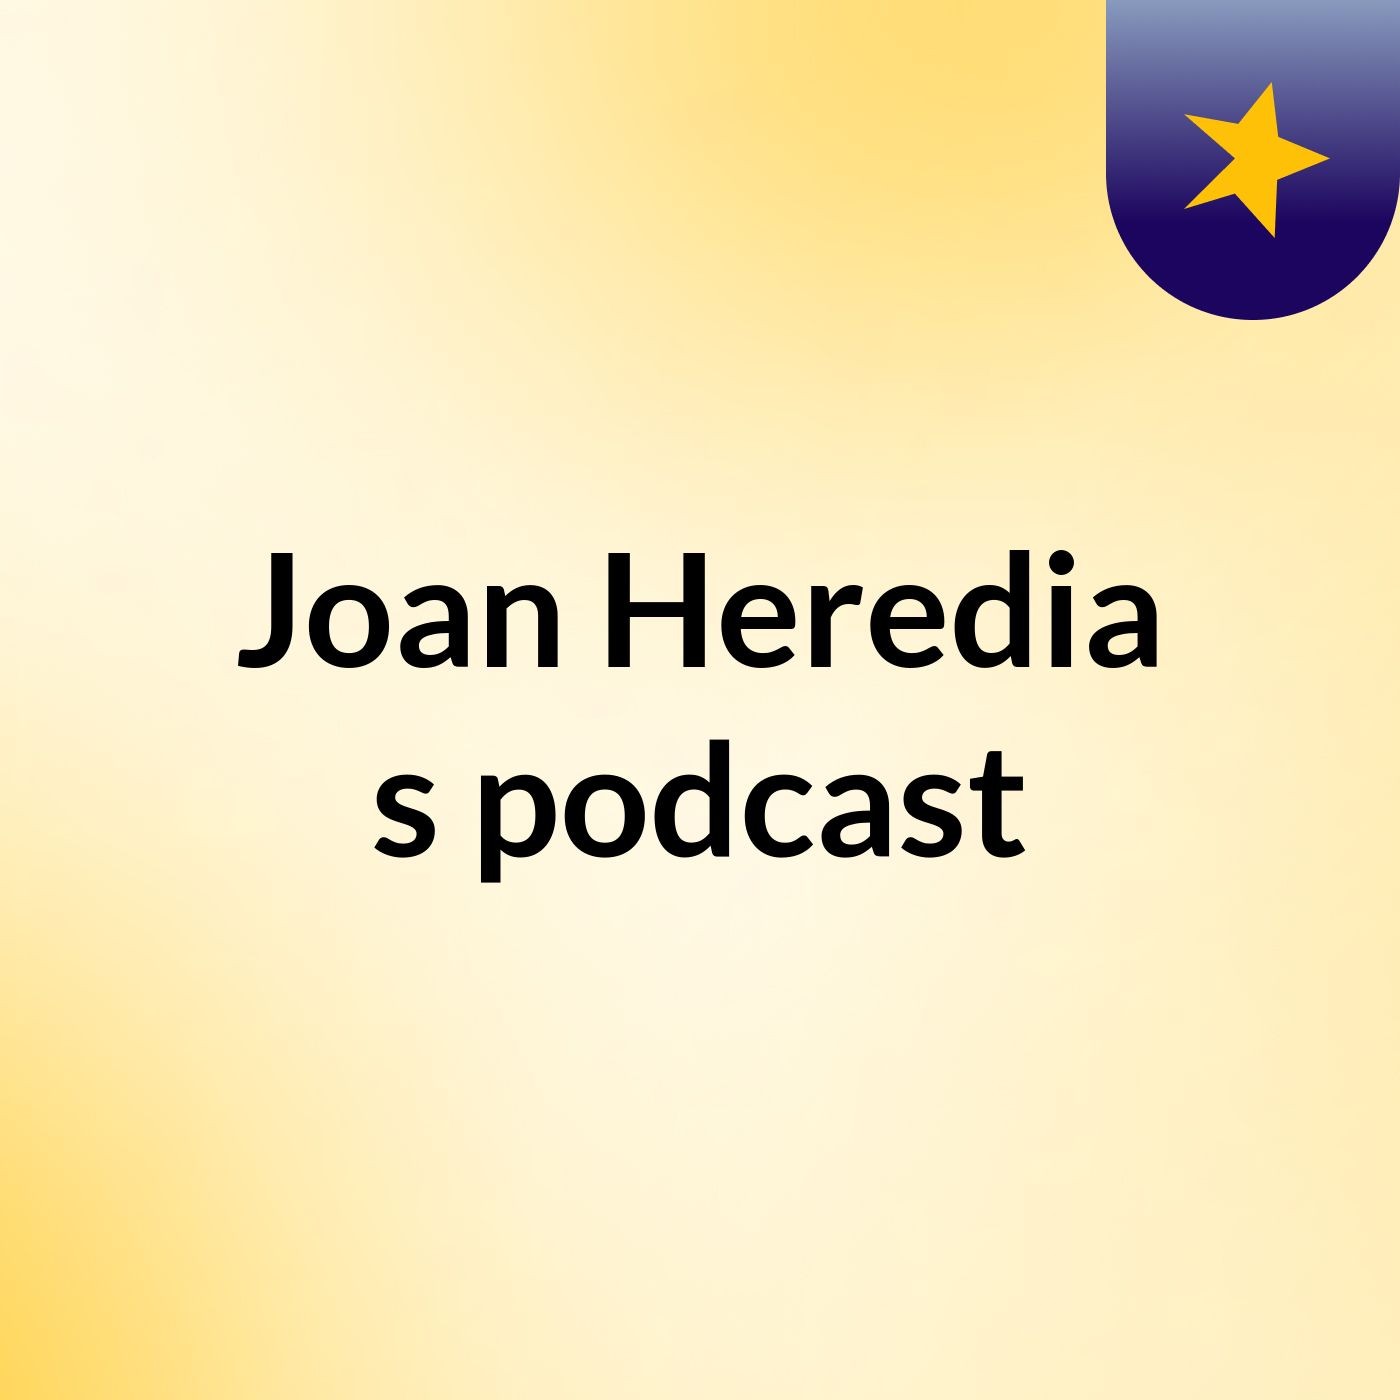 Joan Heredia's podcast